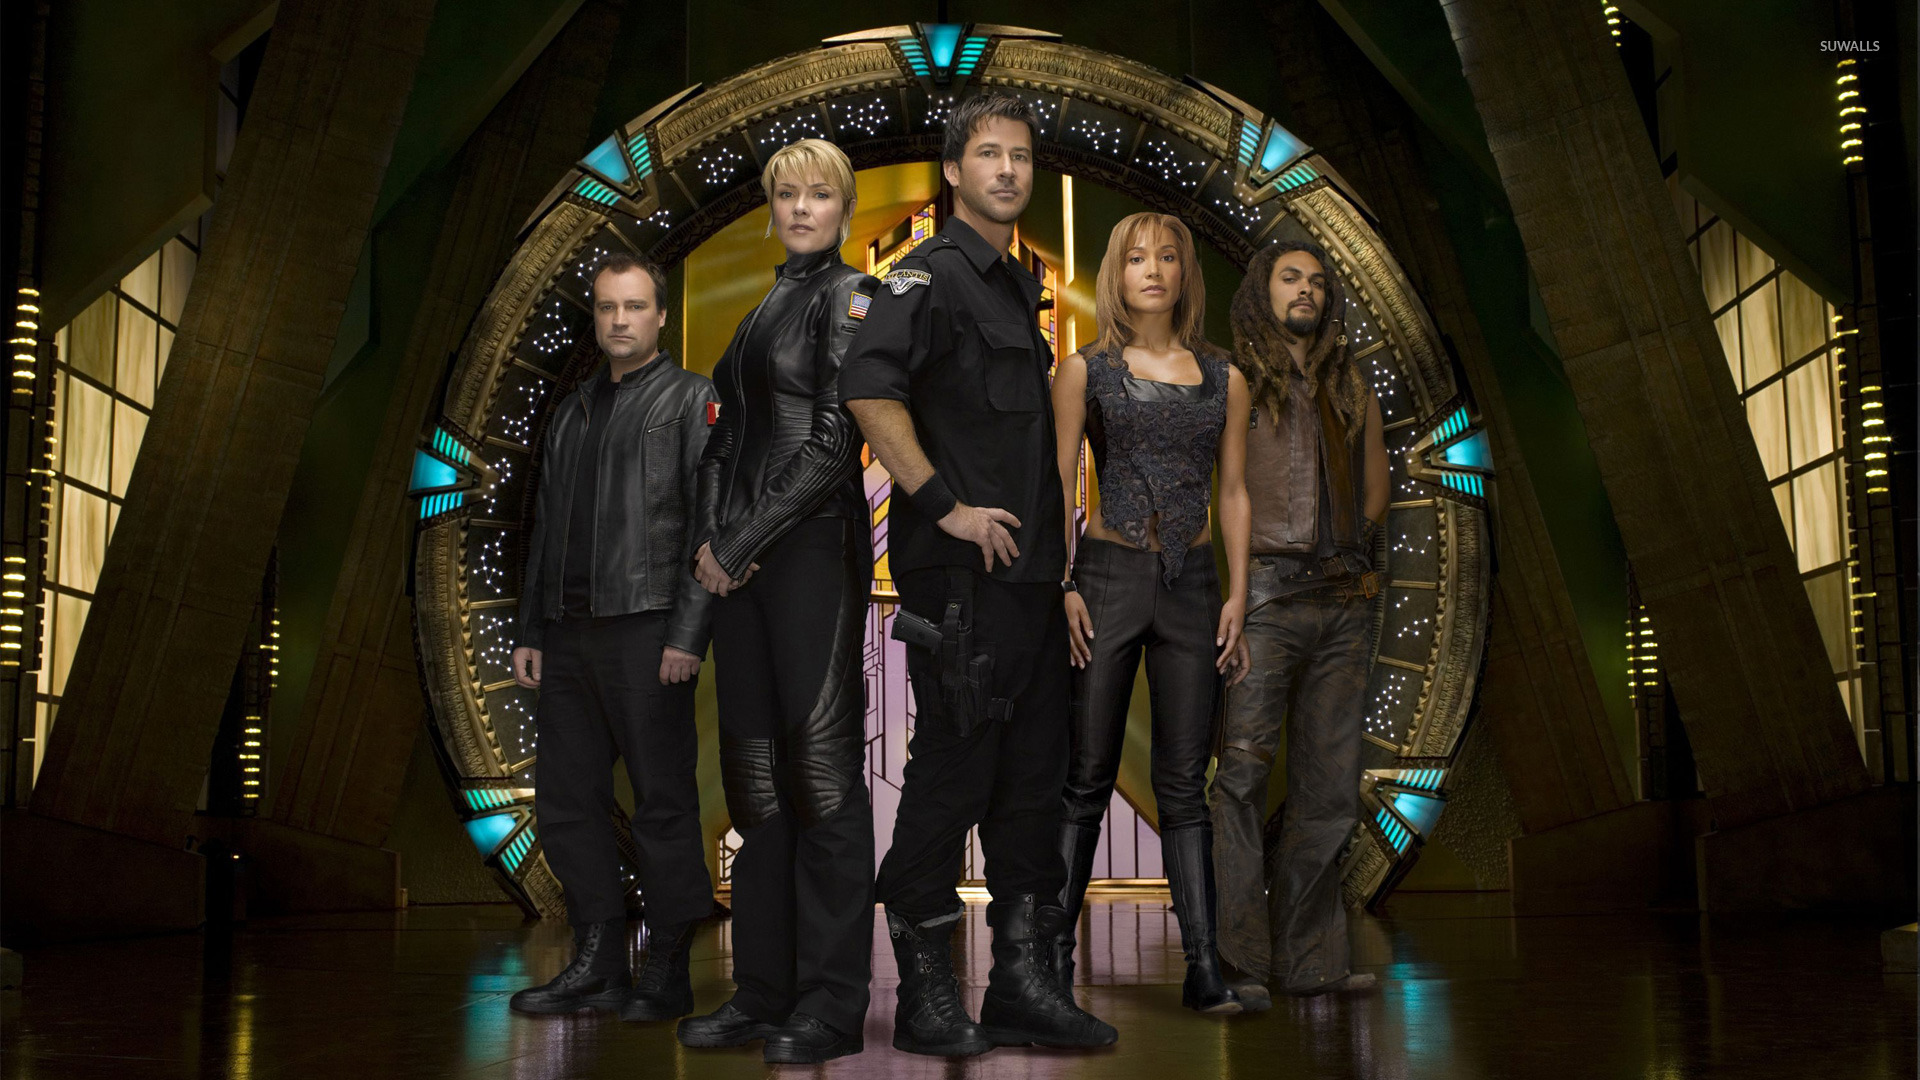 Download Stargate Atlantis 2 wallpaper.